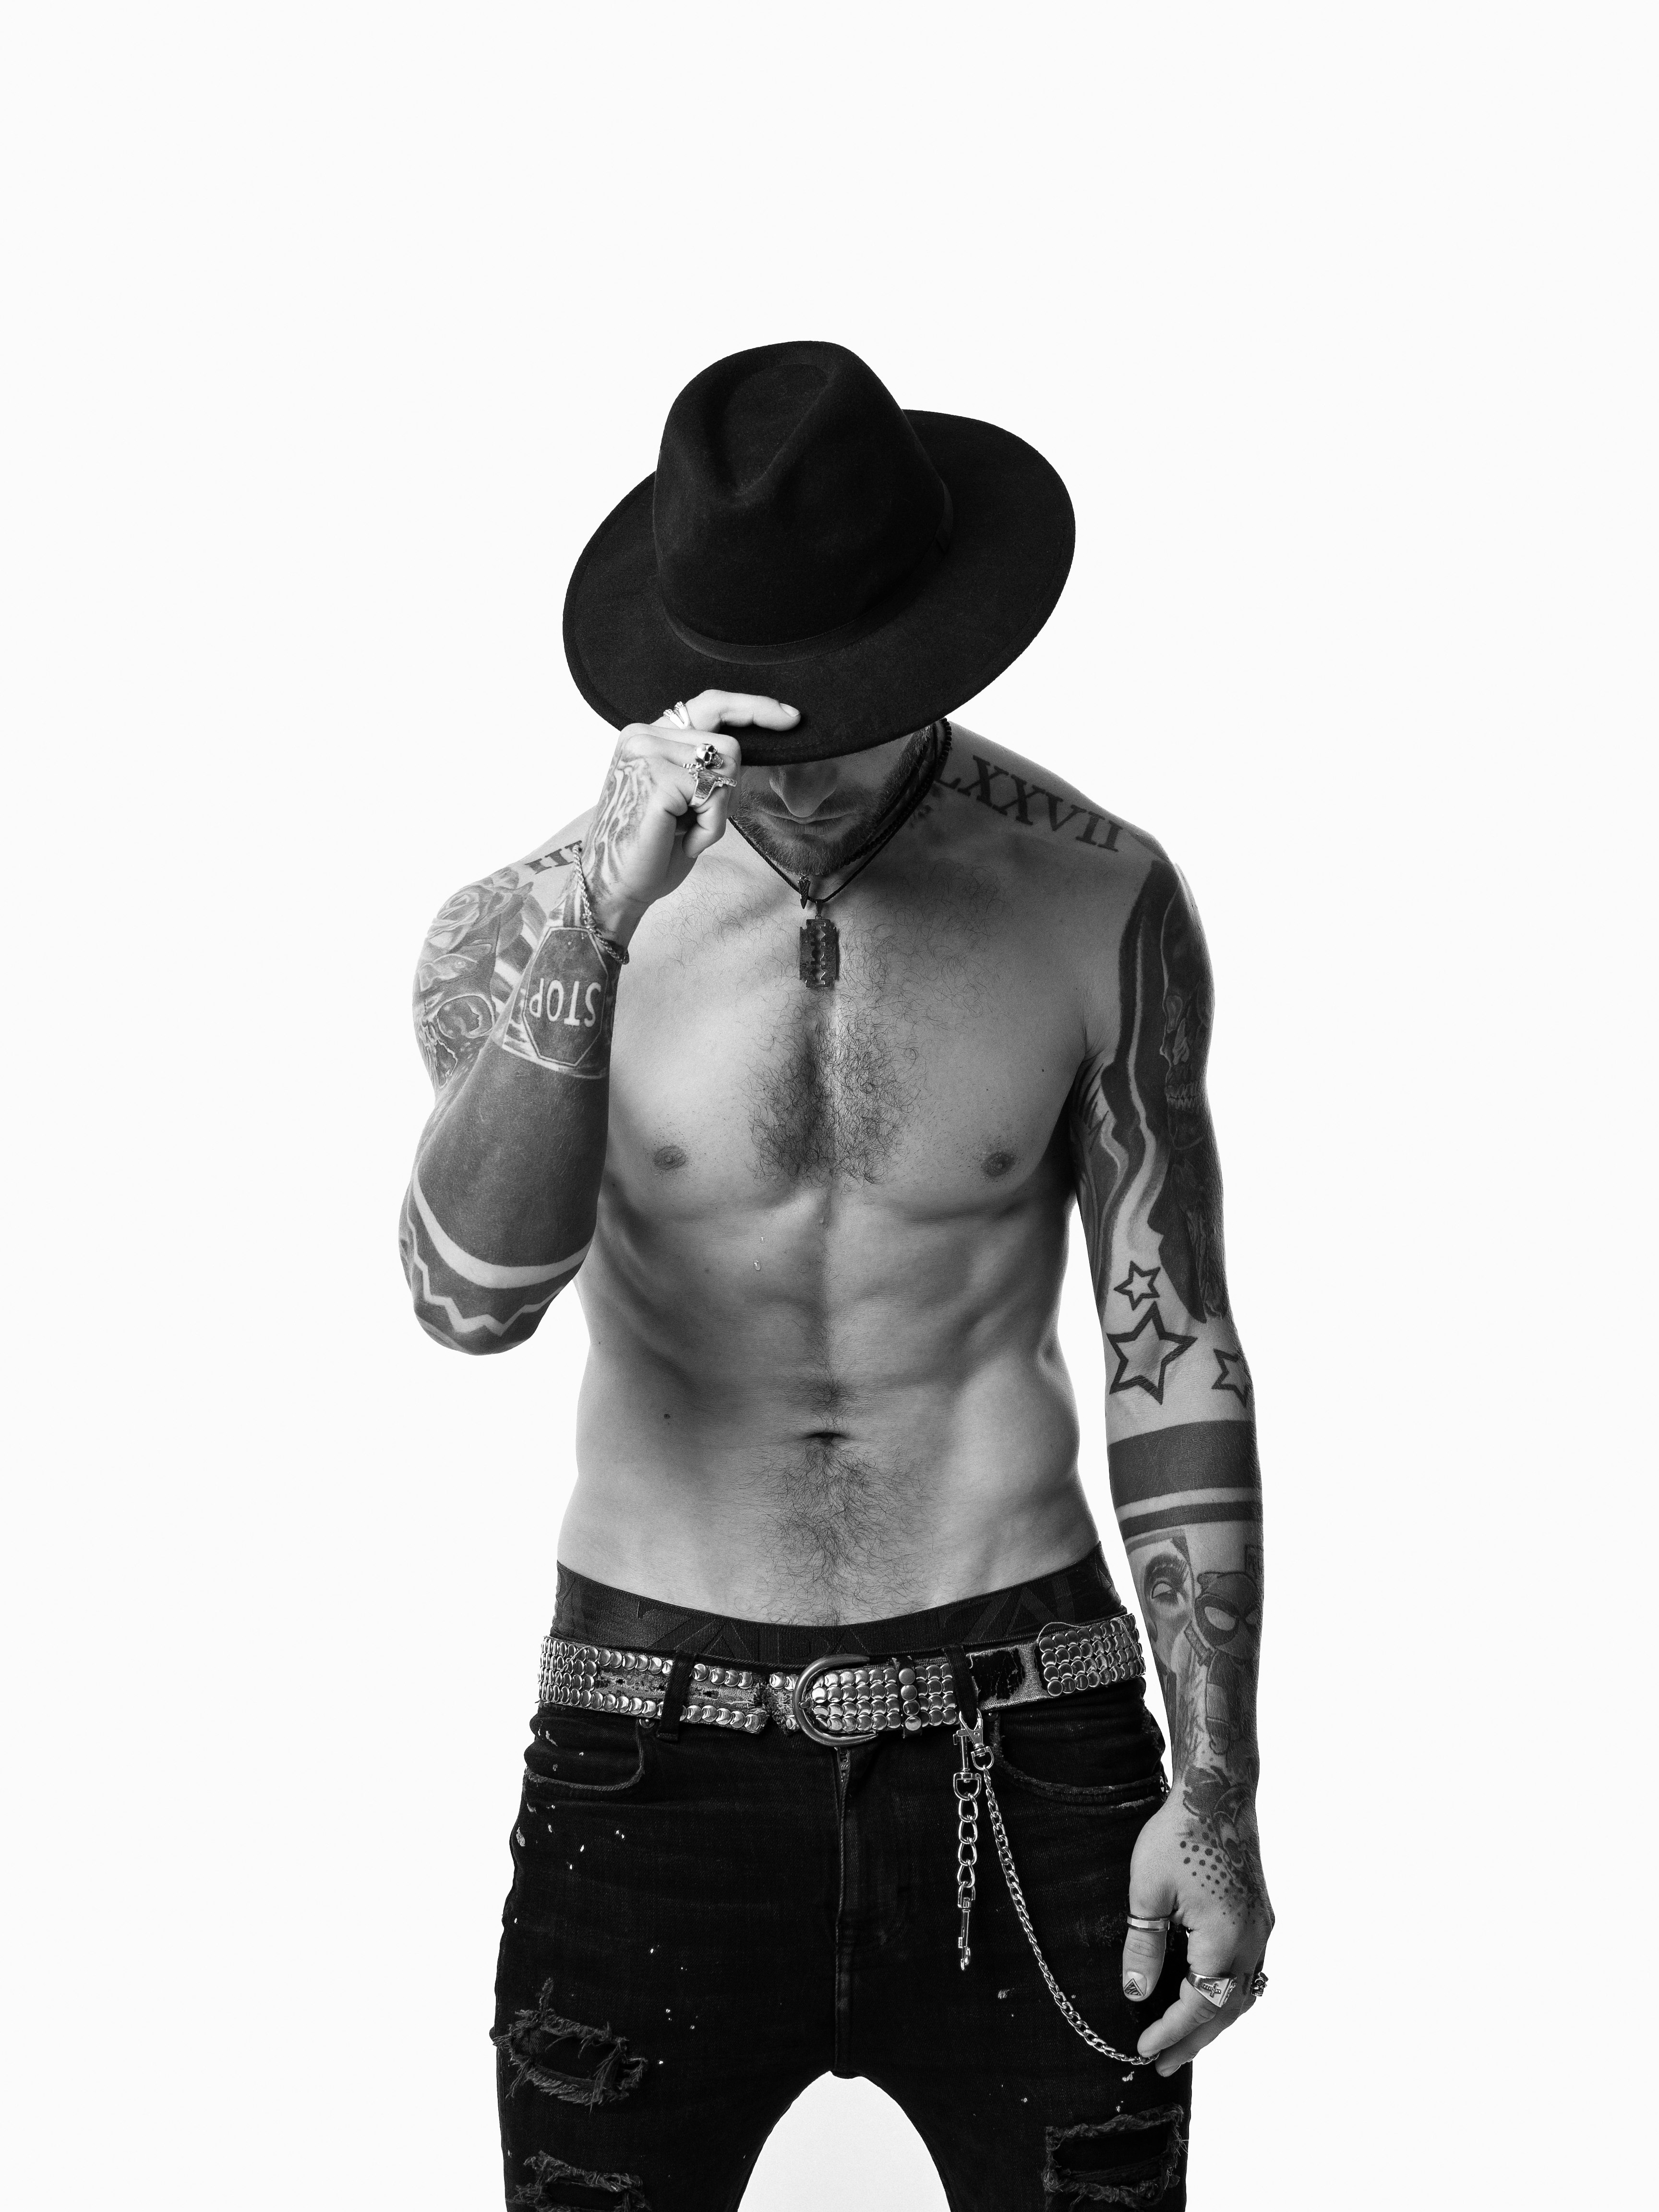 topless man wearing cowboy hat